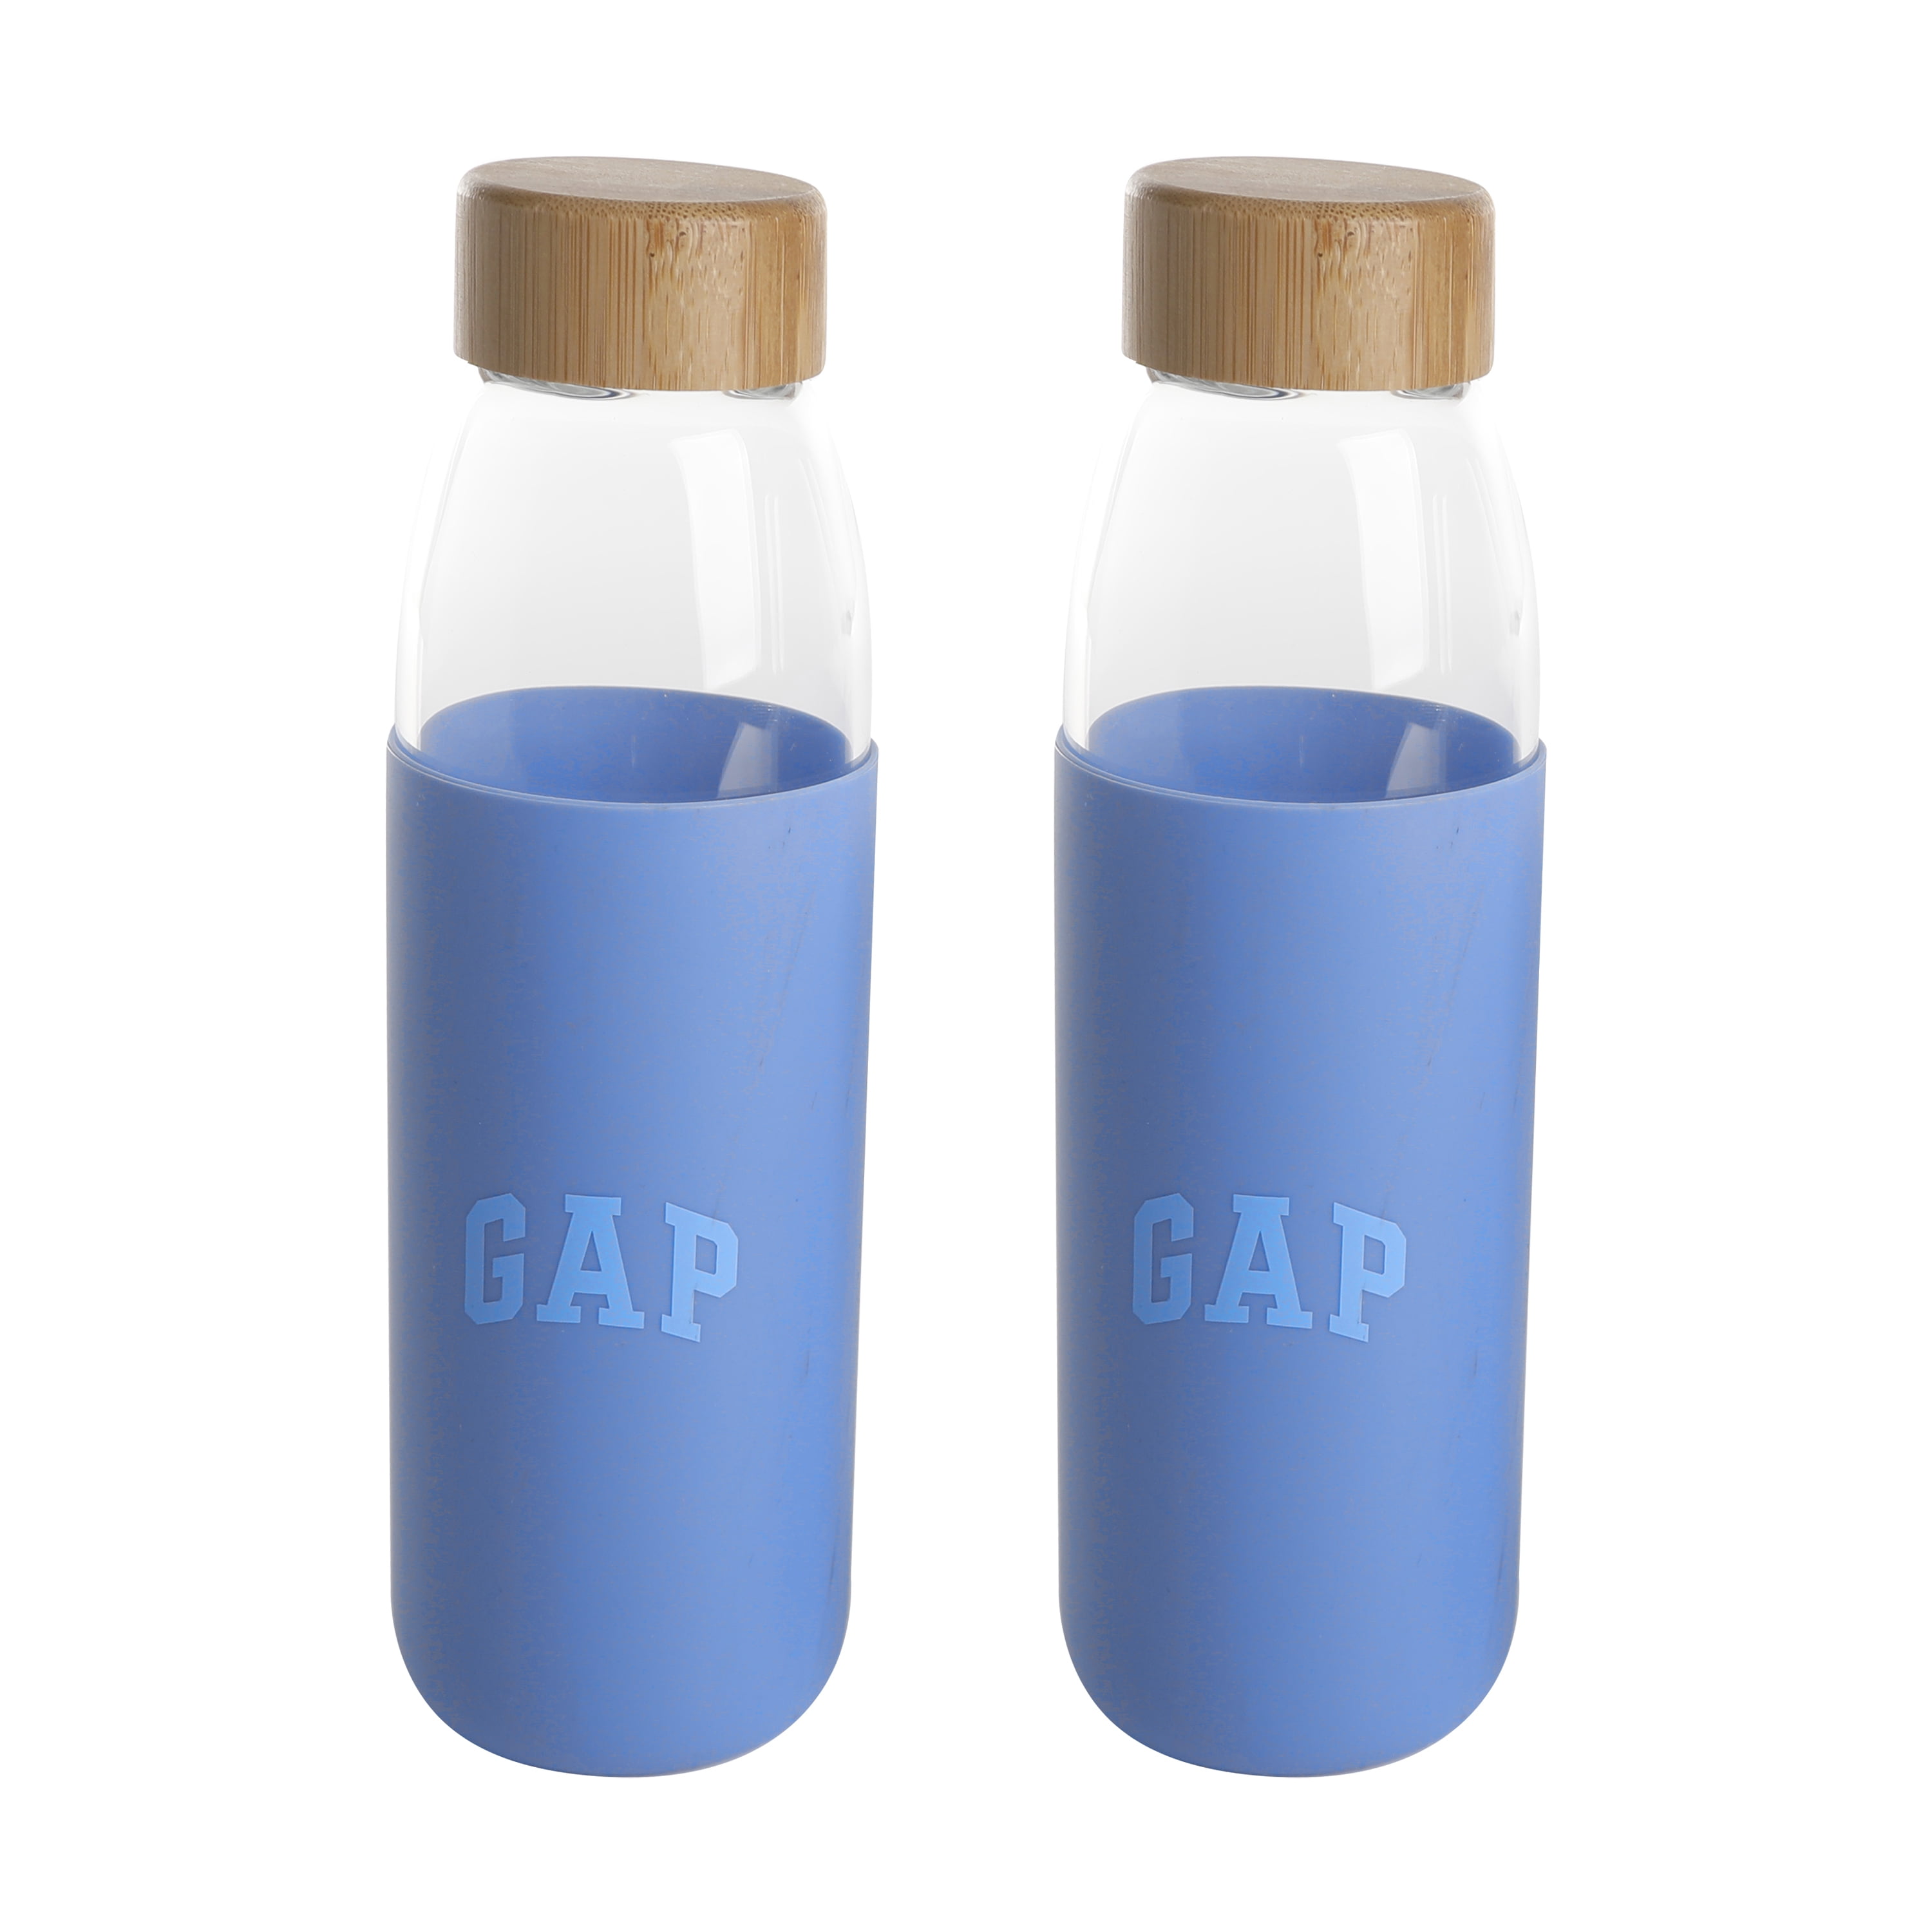 Origin - Borosilicate Glass Water Bottle, Best BPA-Free and Modern